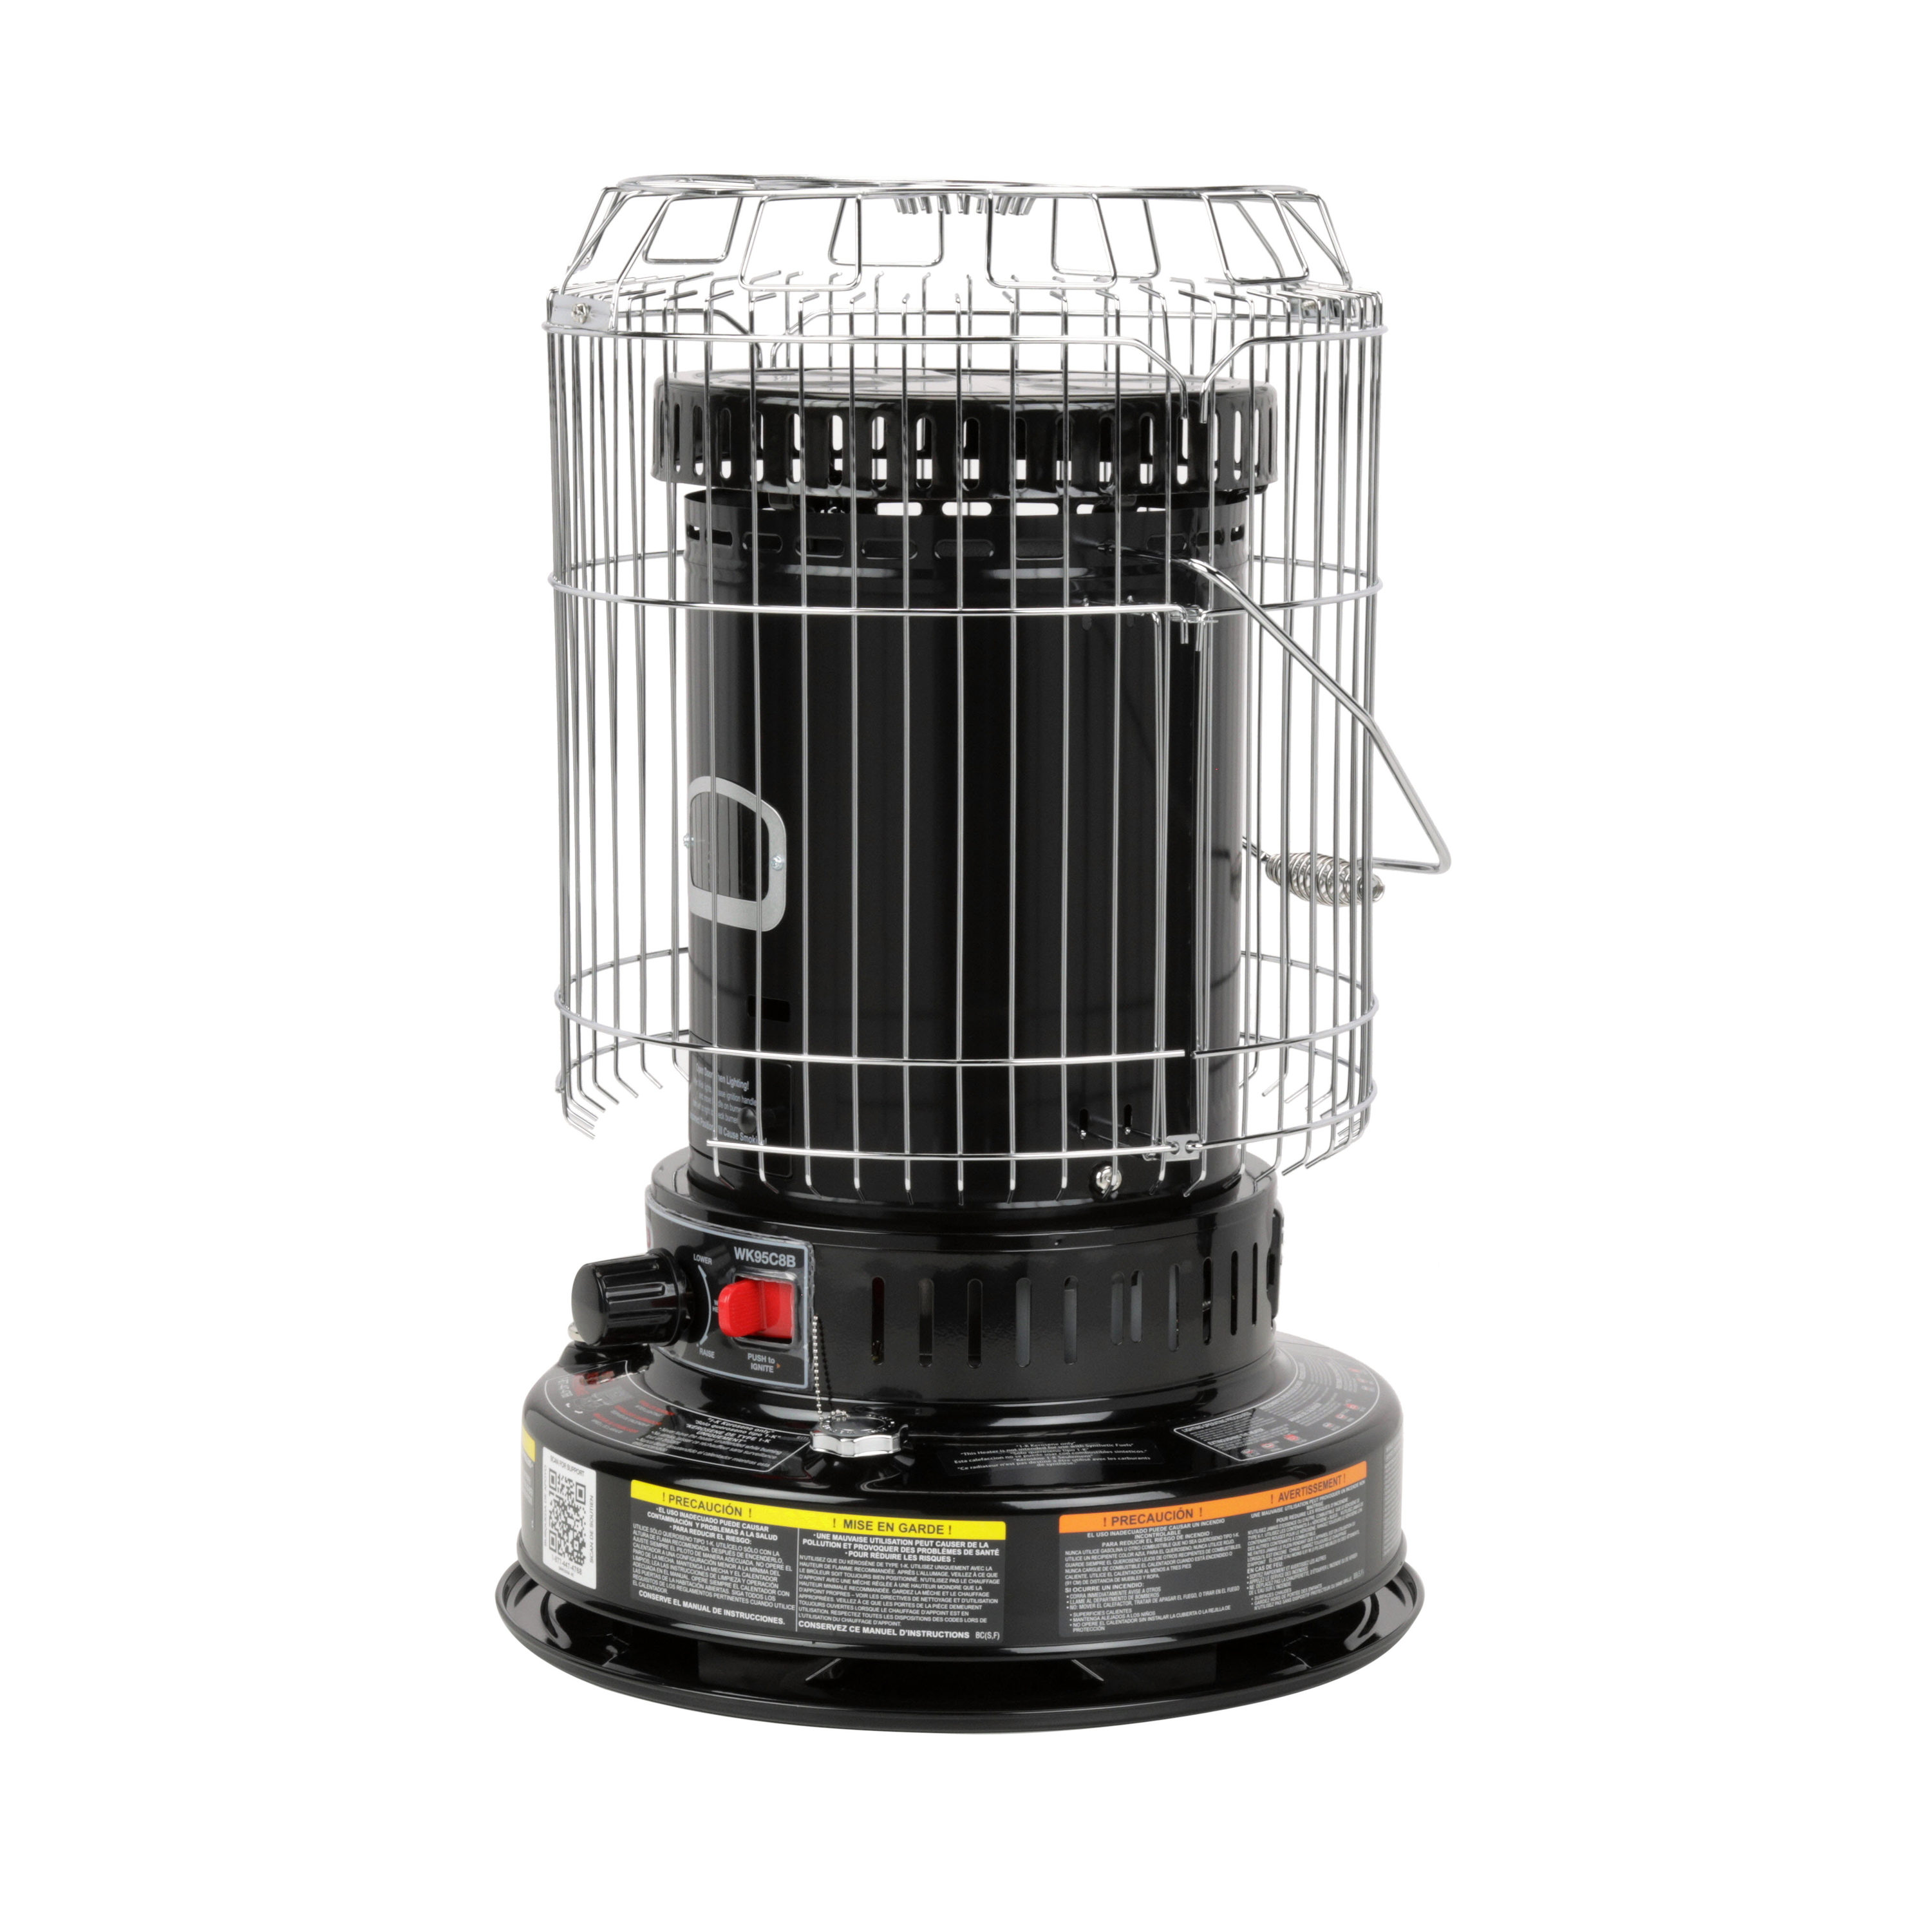 Dura Heat DH2304S 23,800 BTU Portable Indoor Kerosene Heater 